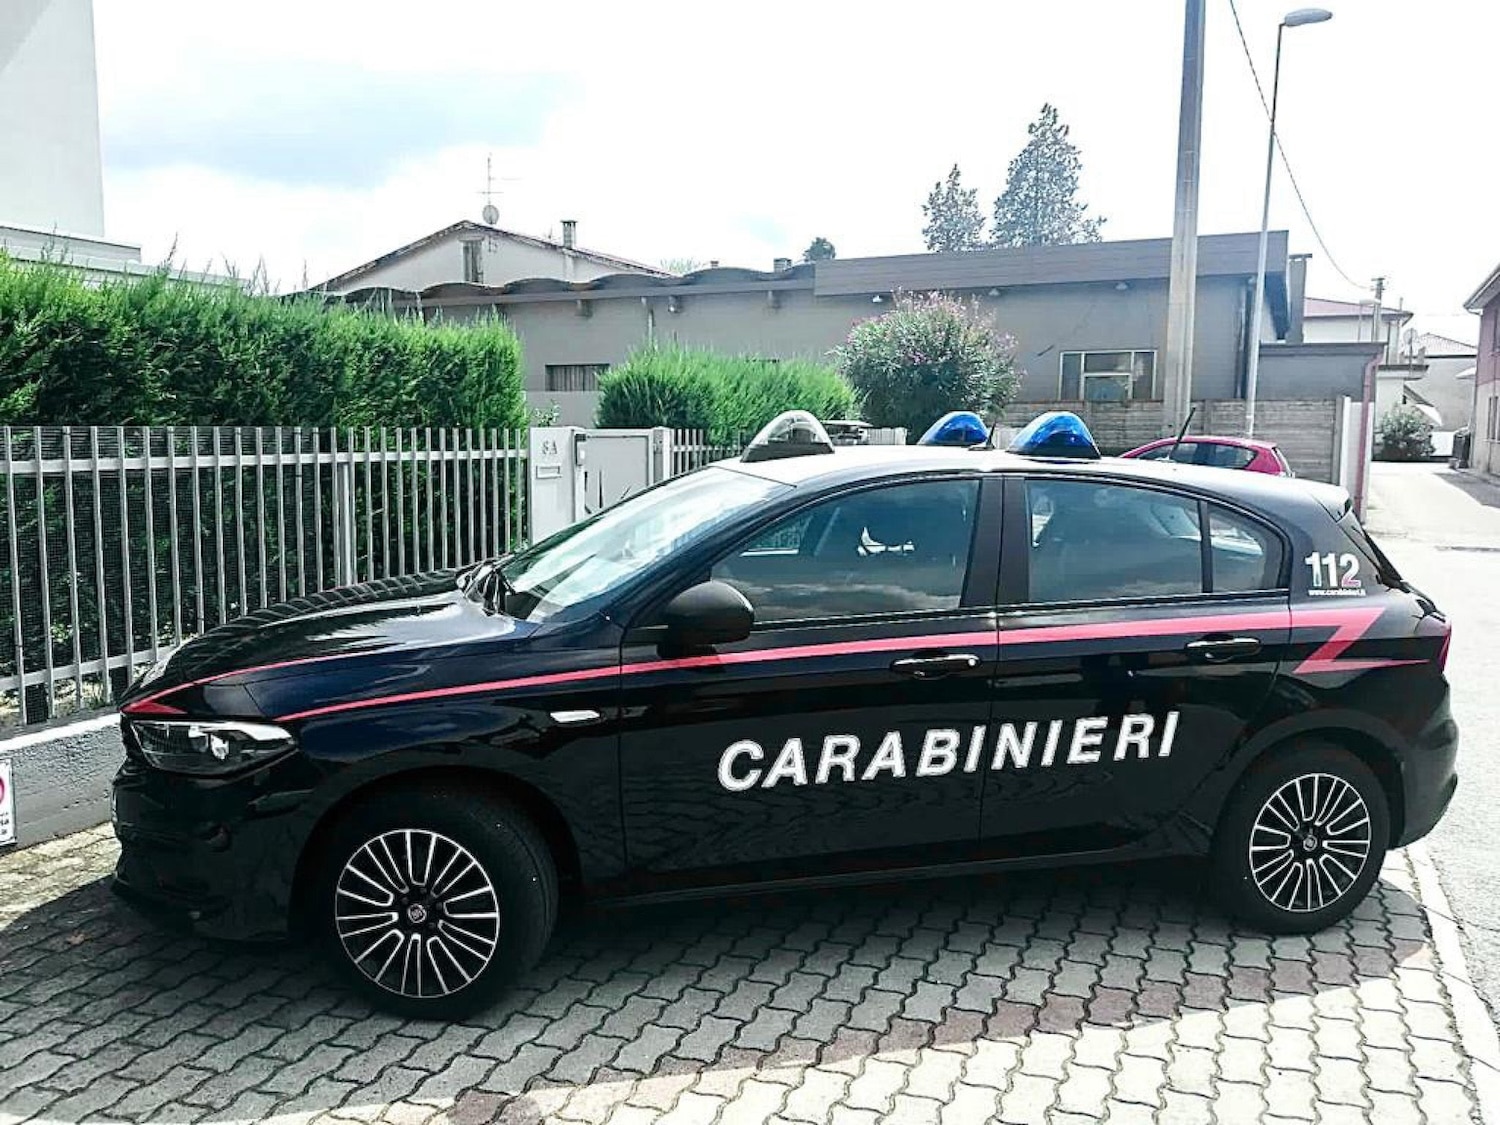 carabinieri auto.jpeg